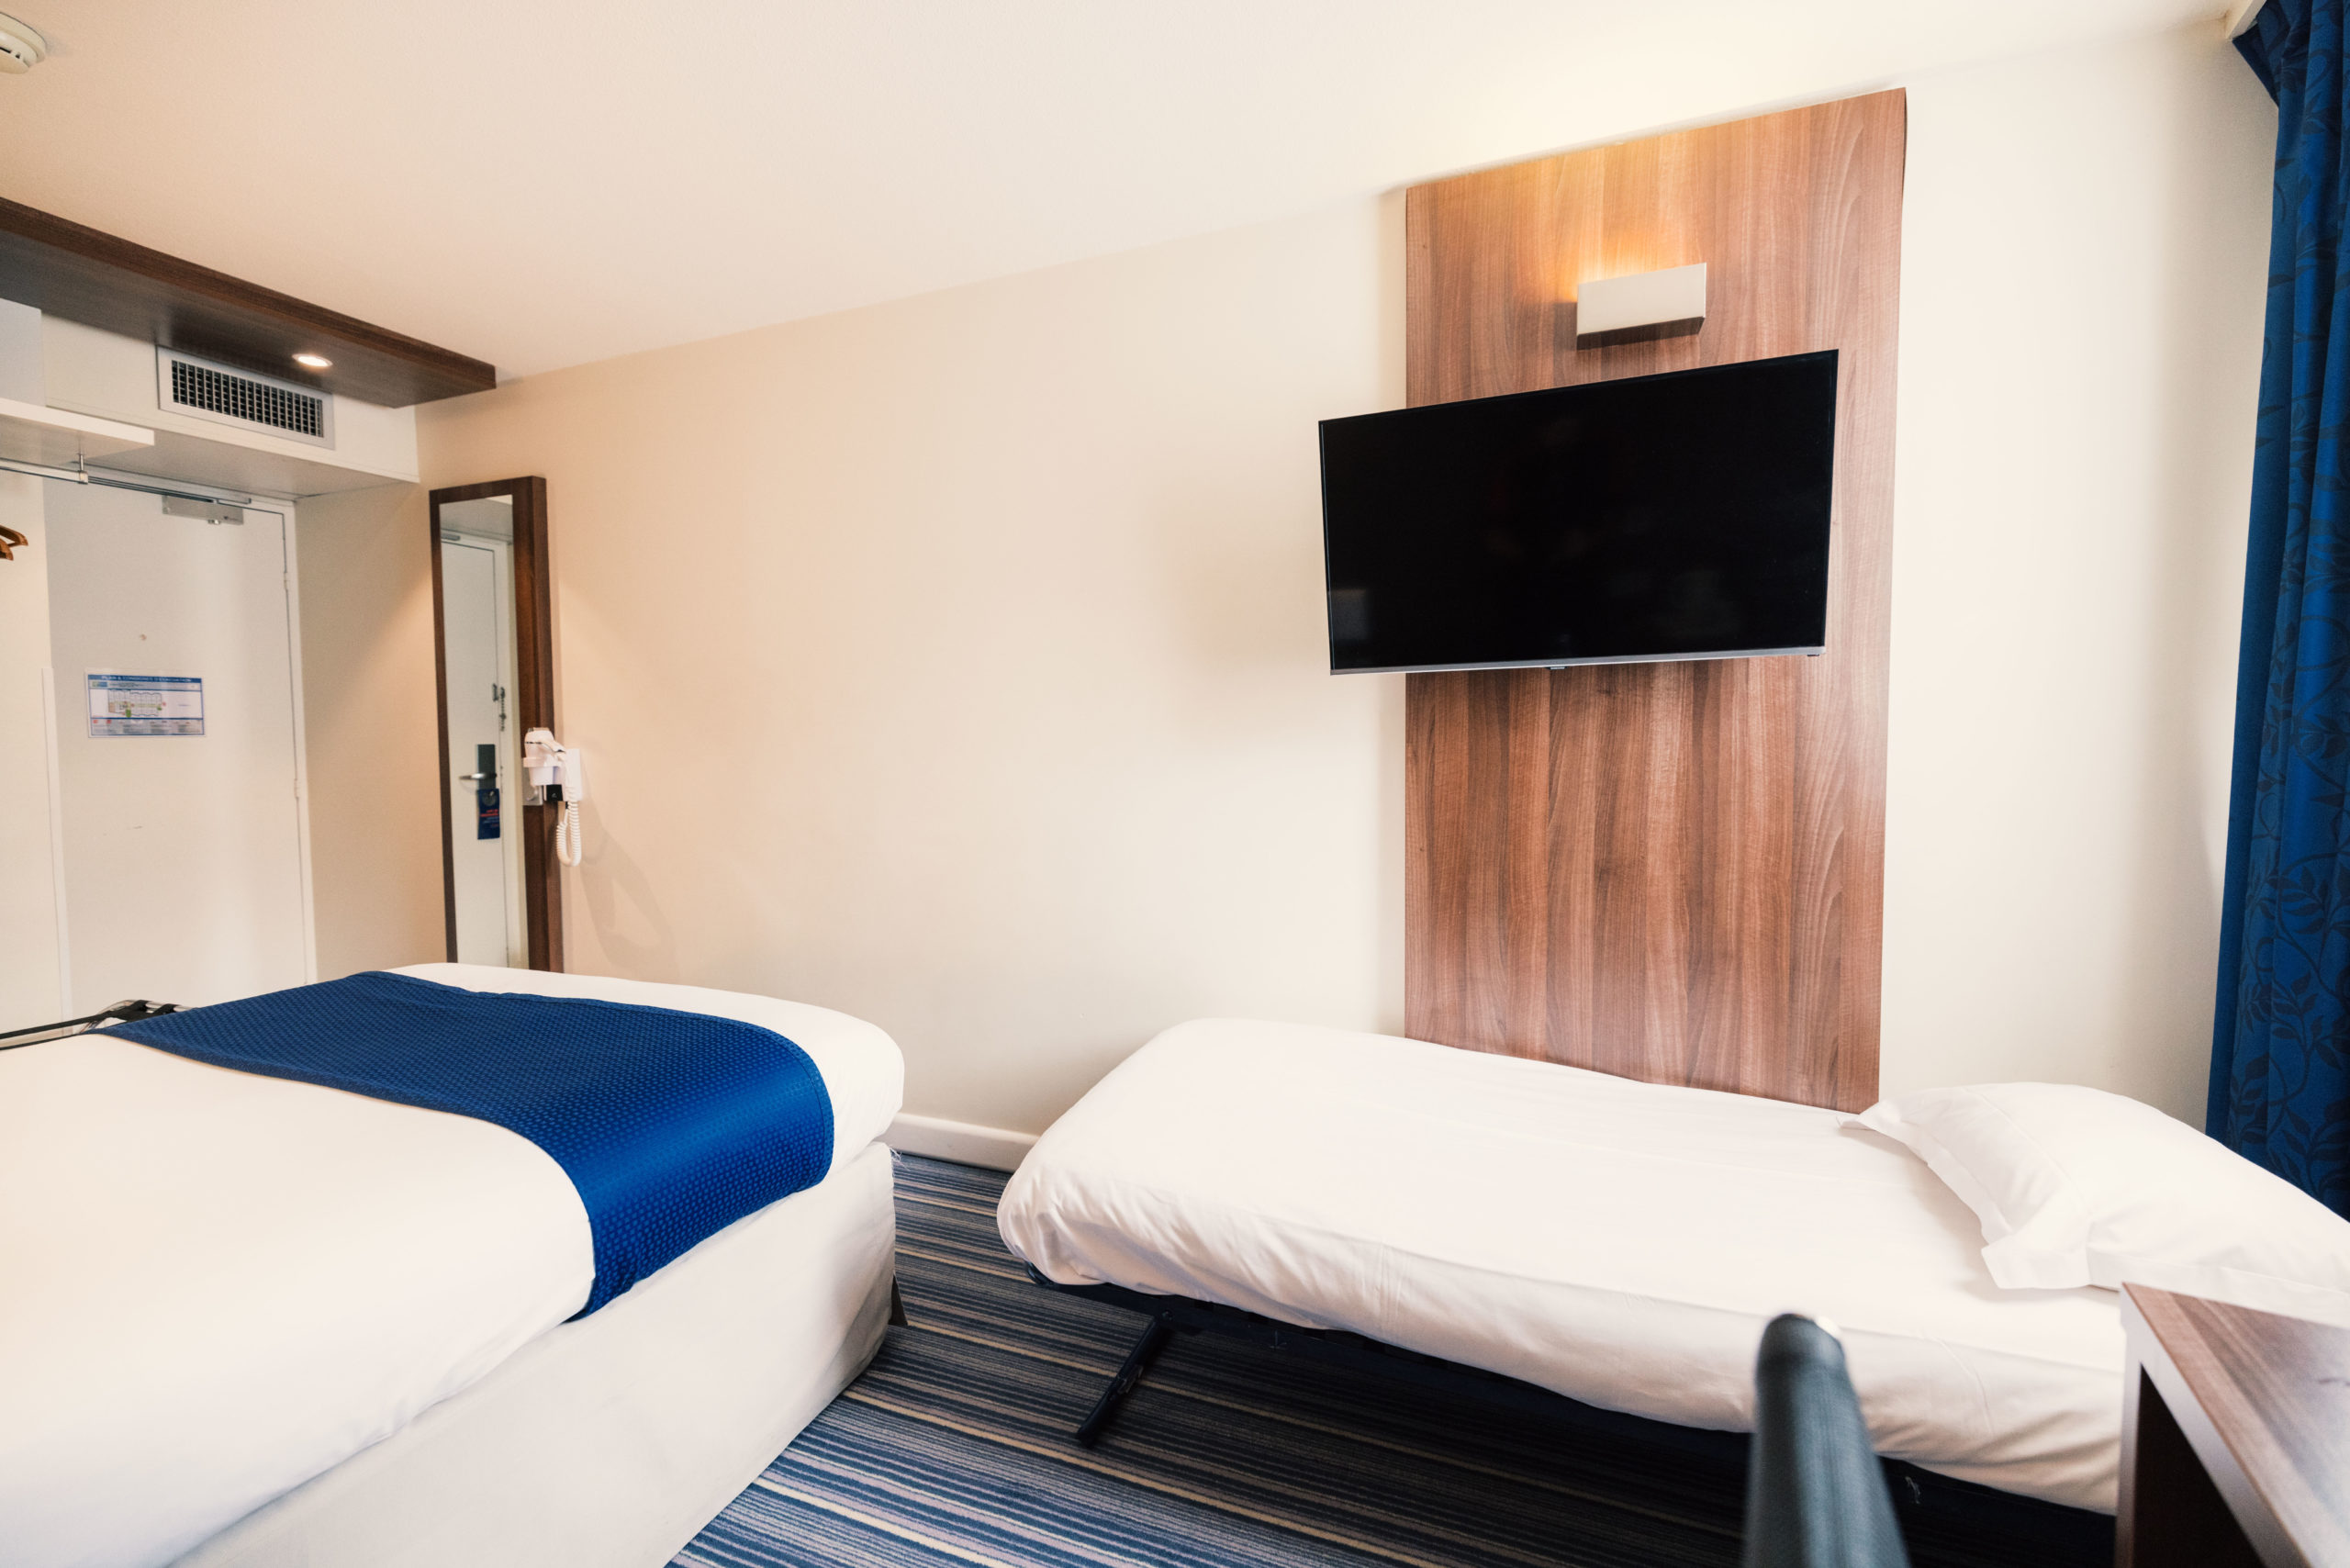 Holiday Inn Express Lille Chambre lits jumeaux et lit d'appoint - chambre familiale